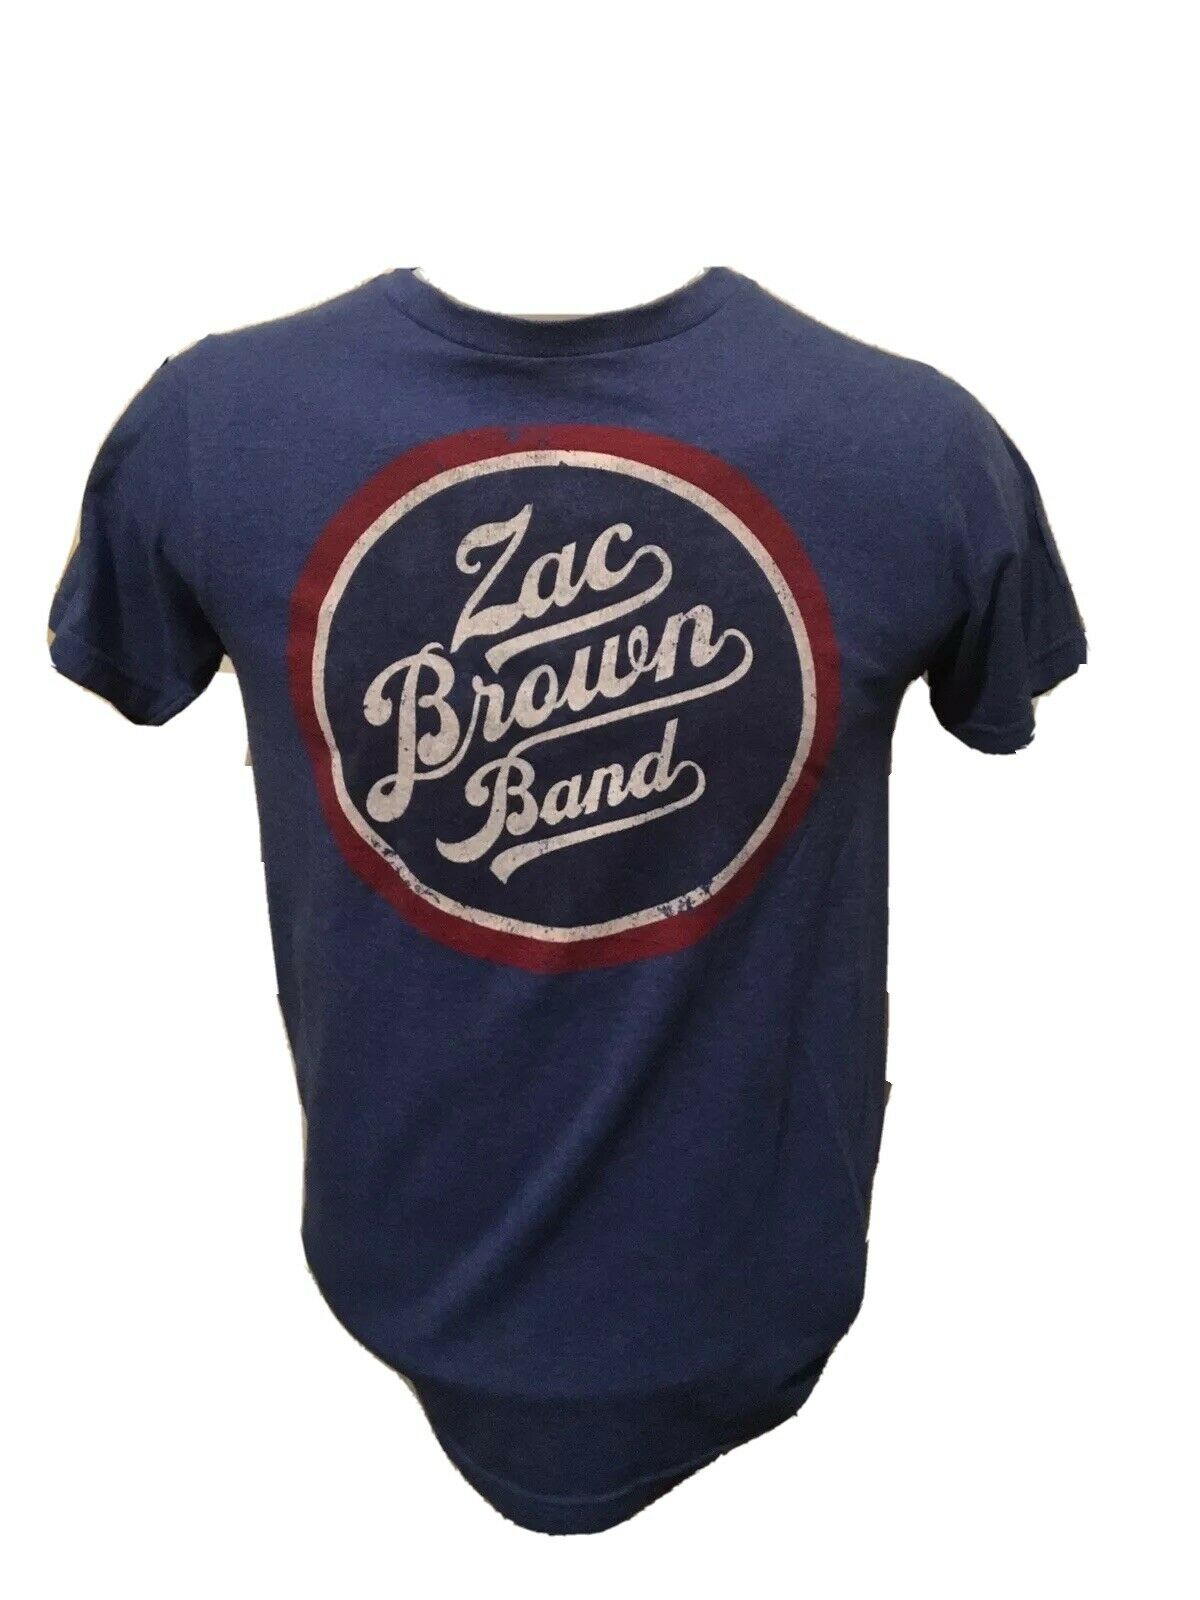 Zac Brown Band Shirt Size Small Chris Stapleton Blackberry Smoke Eric Church